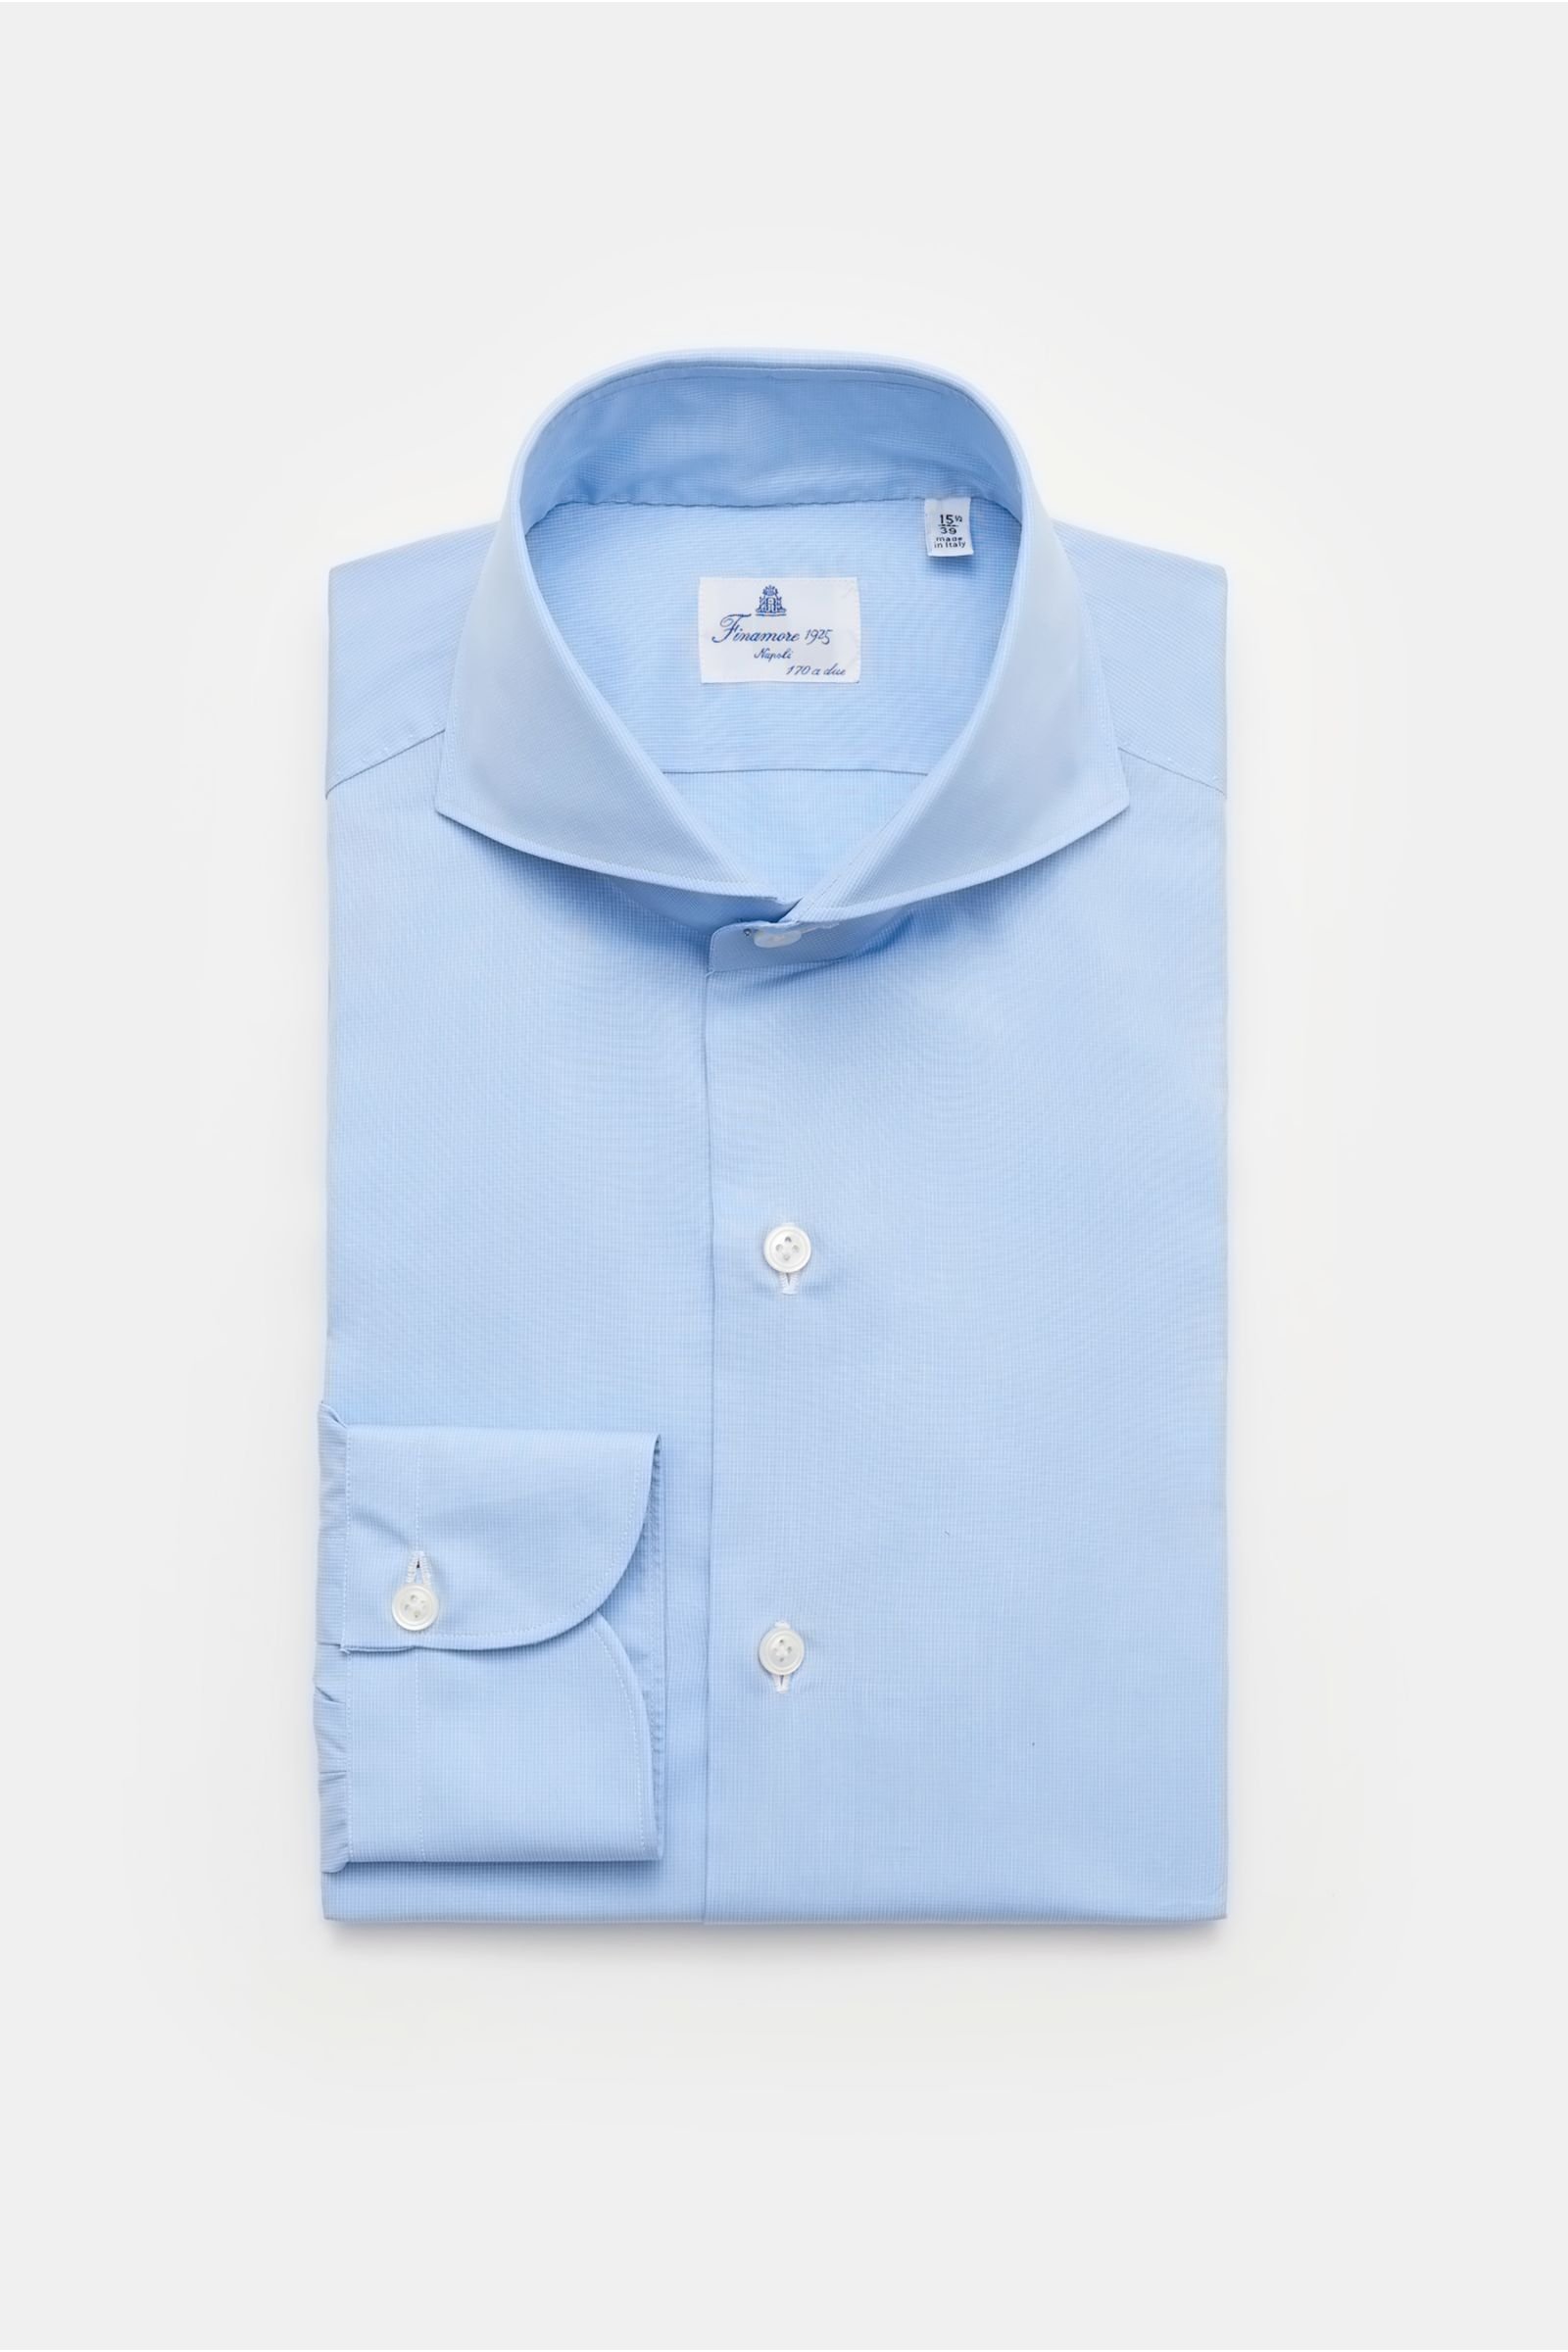 Business shirt 'Sergio Milano' shark collar, light blue/white checked